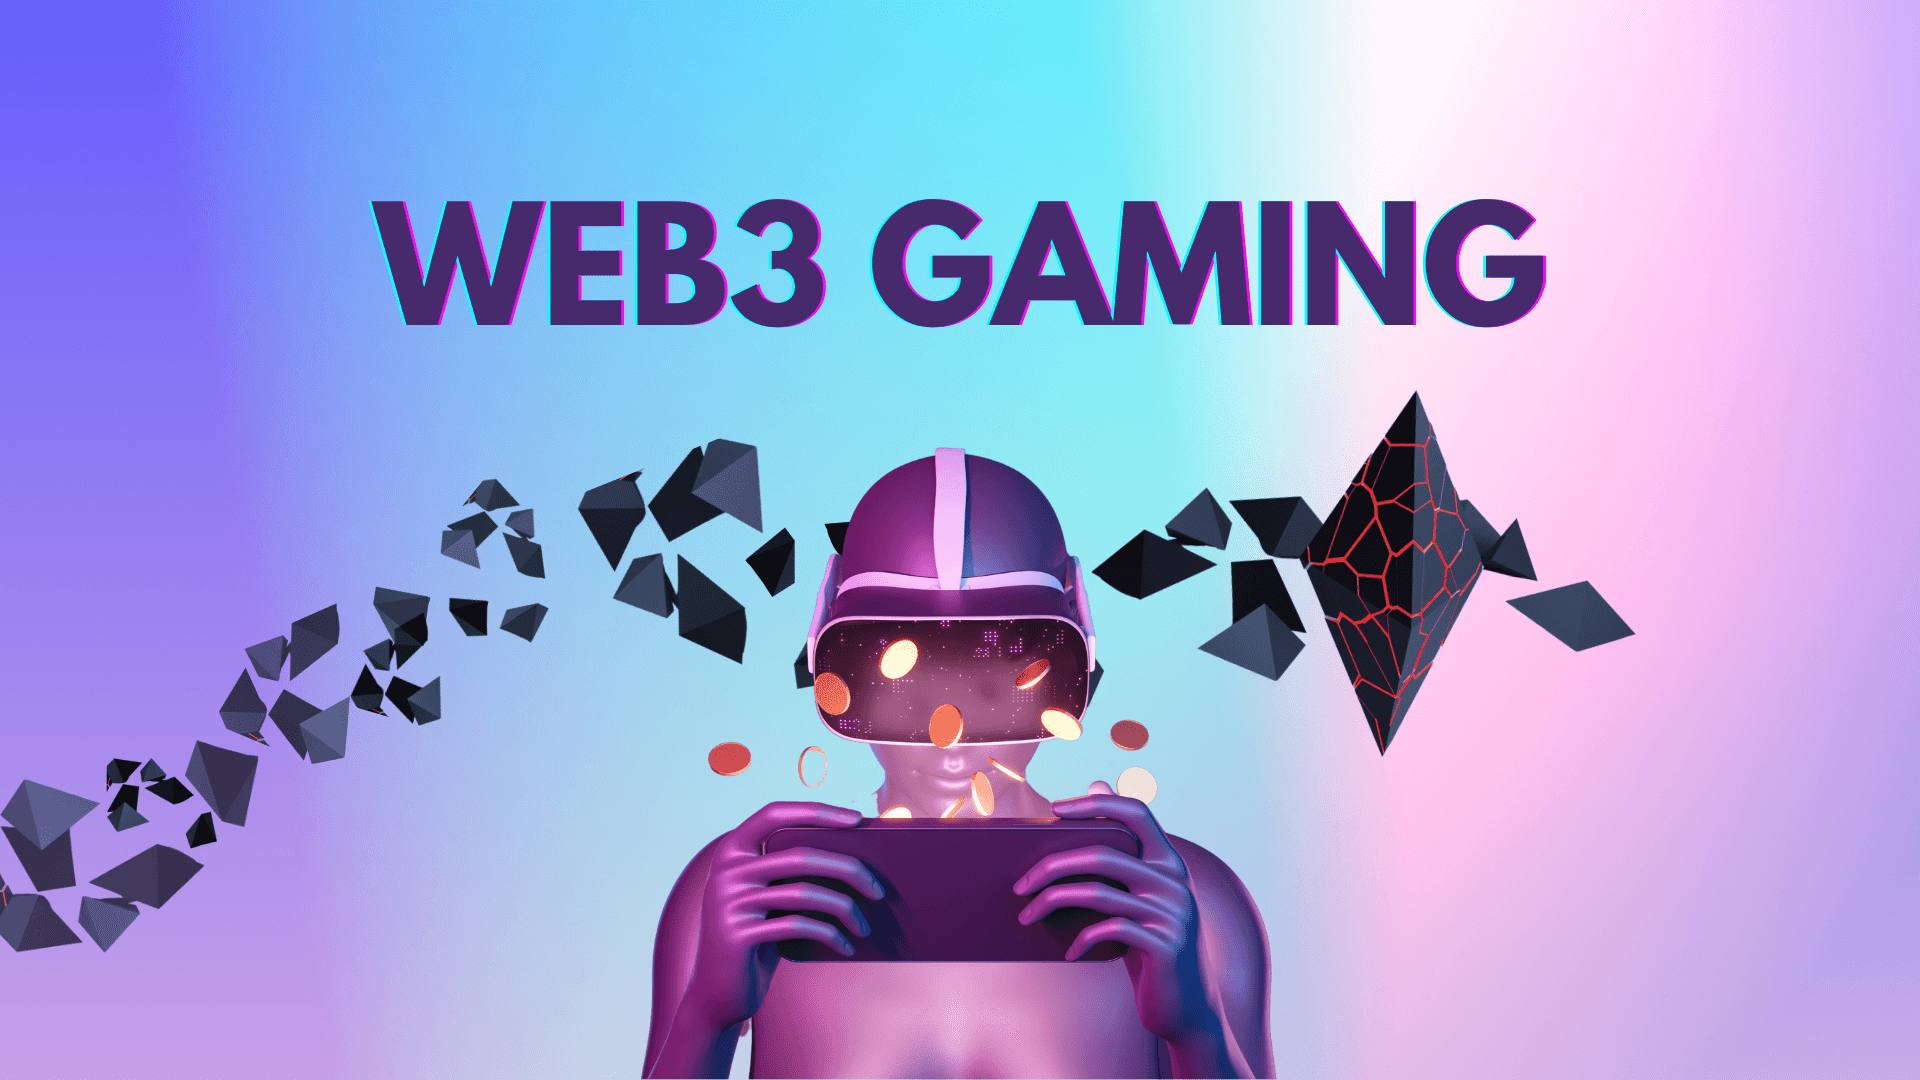 Web3 Gaming News: KMON: Genesis, Boss Fighters, Vulcan Forged, SuperWalk, and Rebel Bots Updates